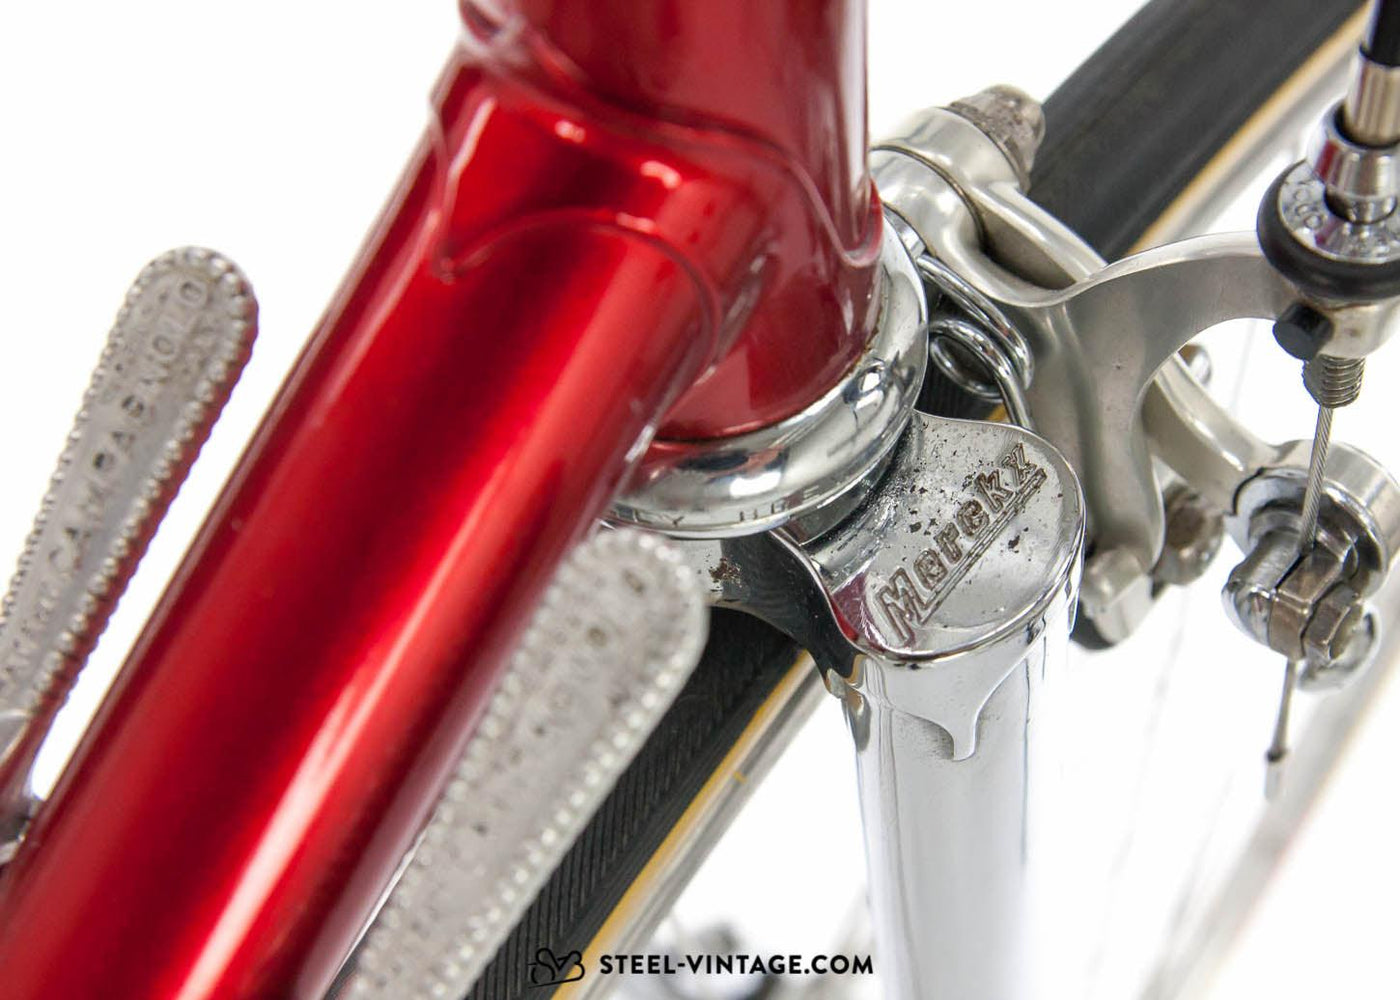 Eddy Merckx Professional 1982 Classic Bicycle - Steel Vintage Bikes